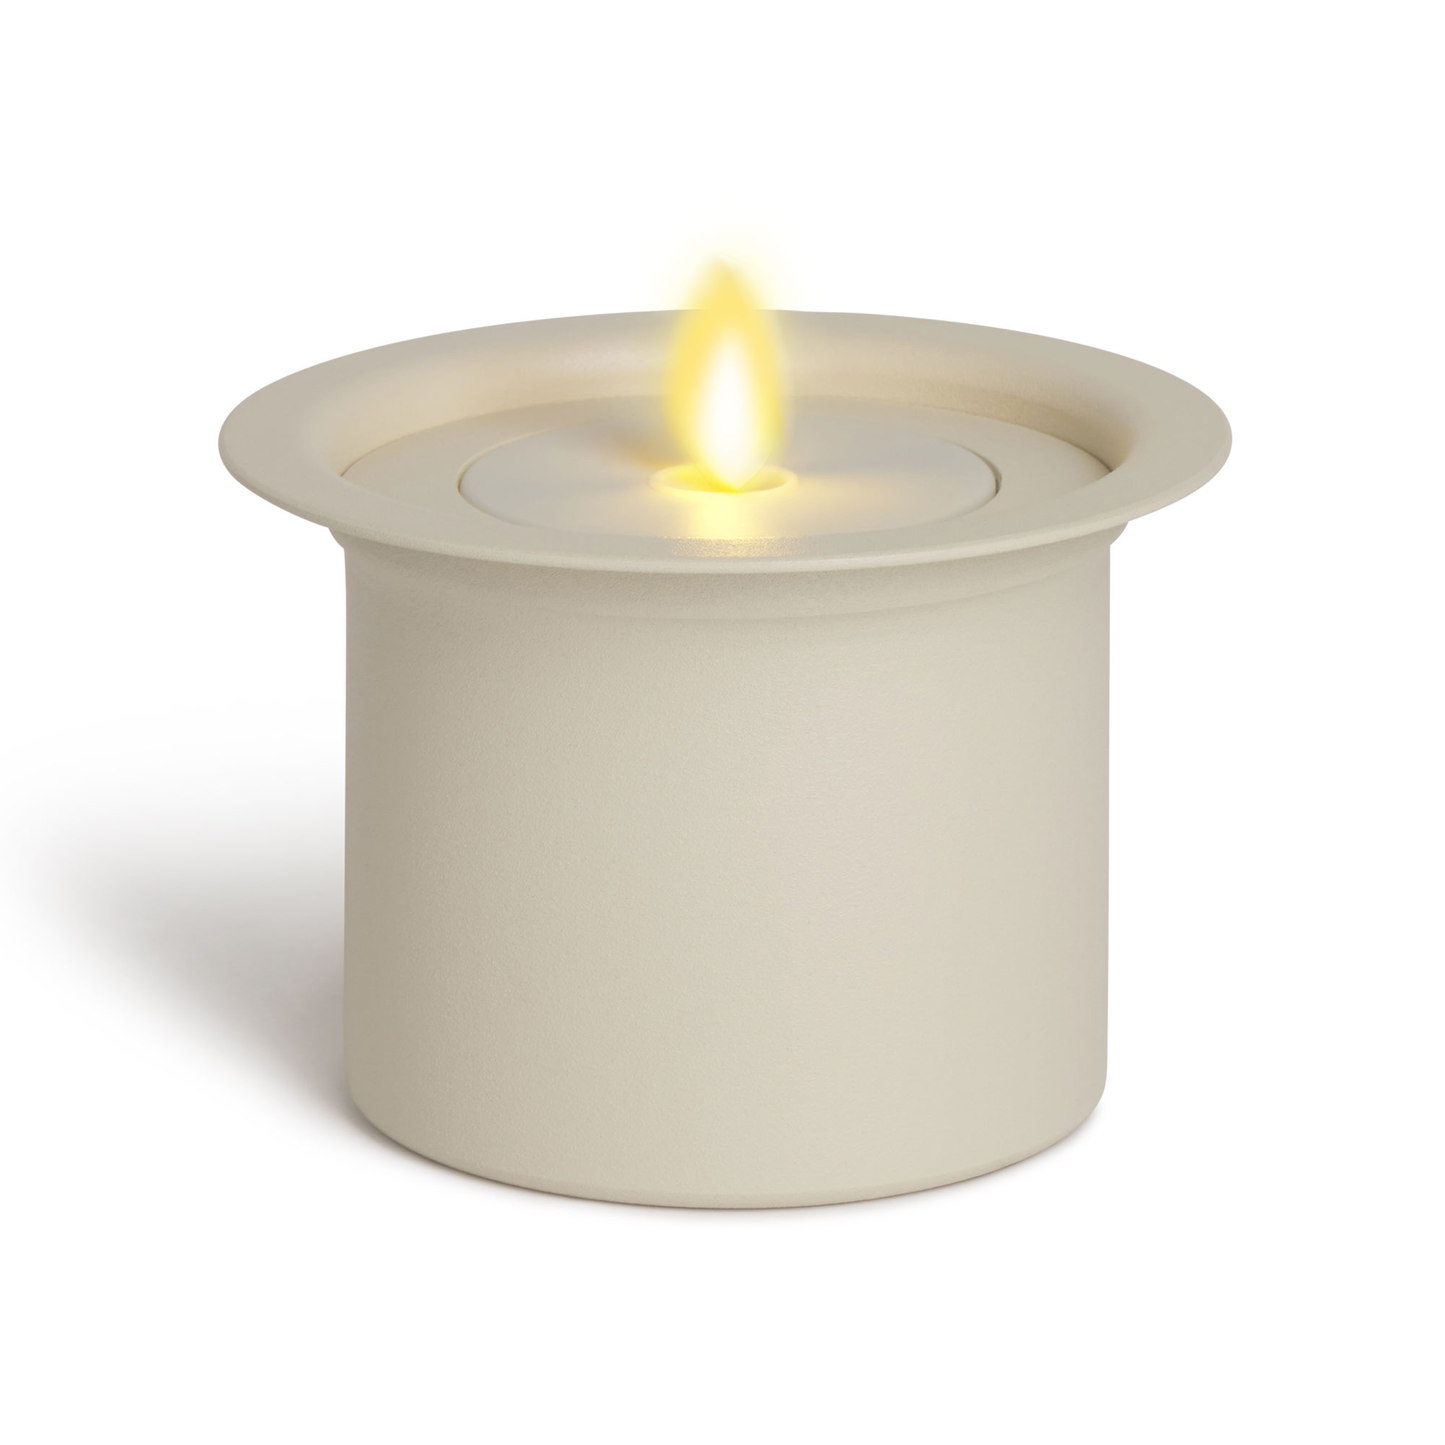 Medium Concrete Cylinder Decorative Candle Holder with Outdoor Votive